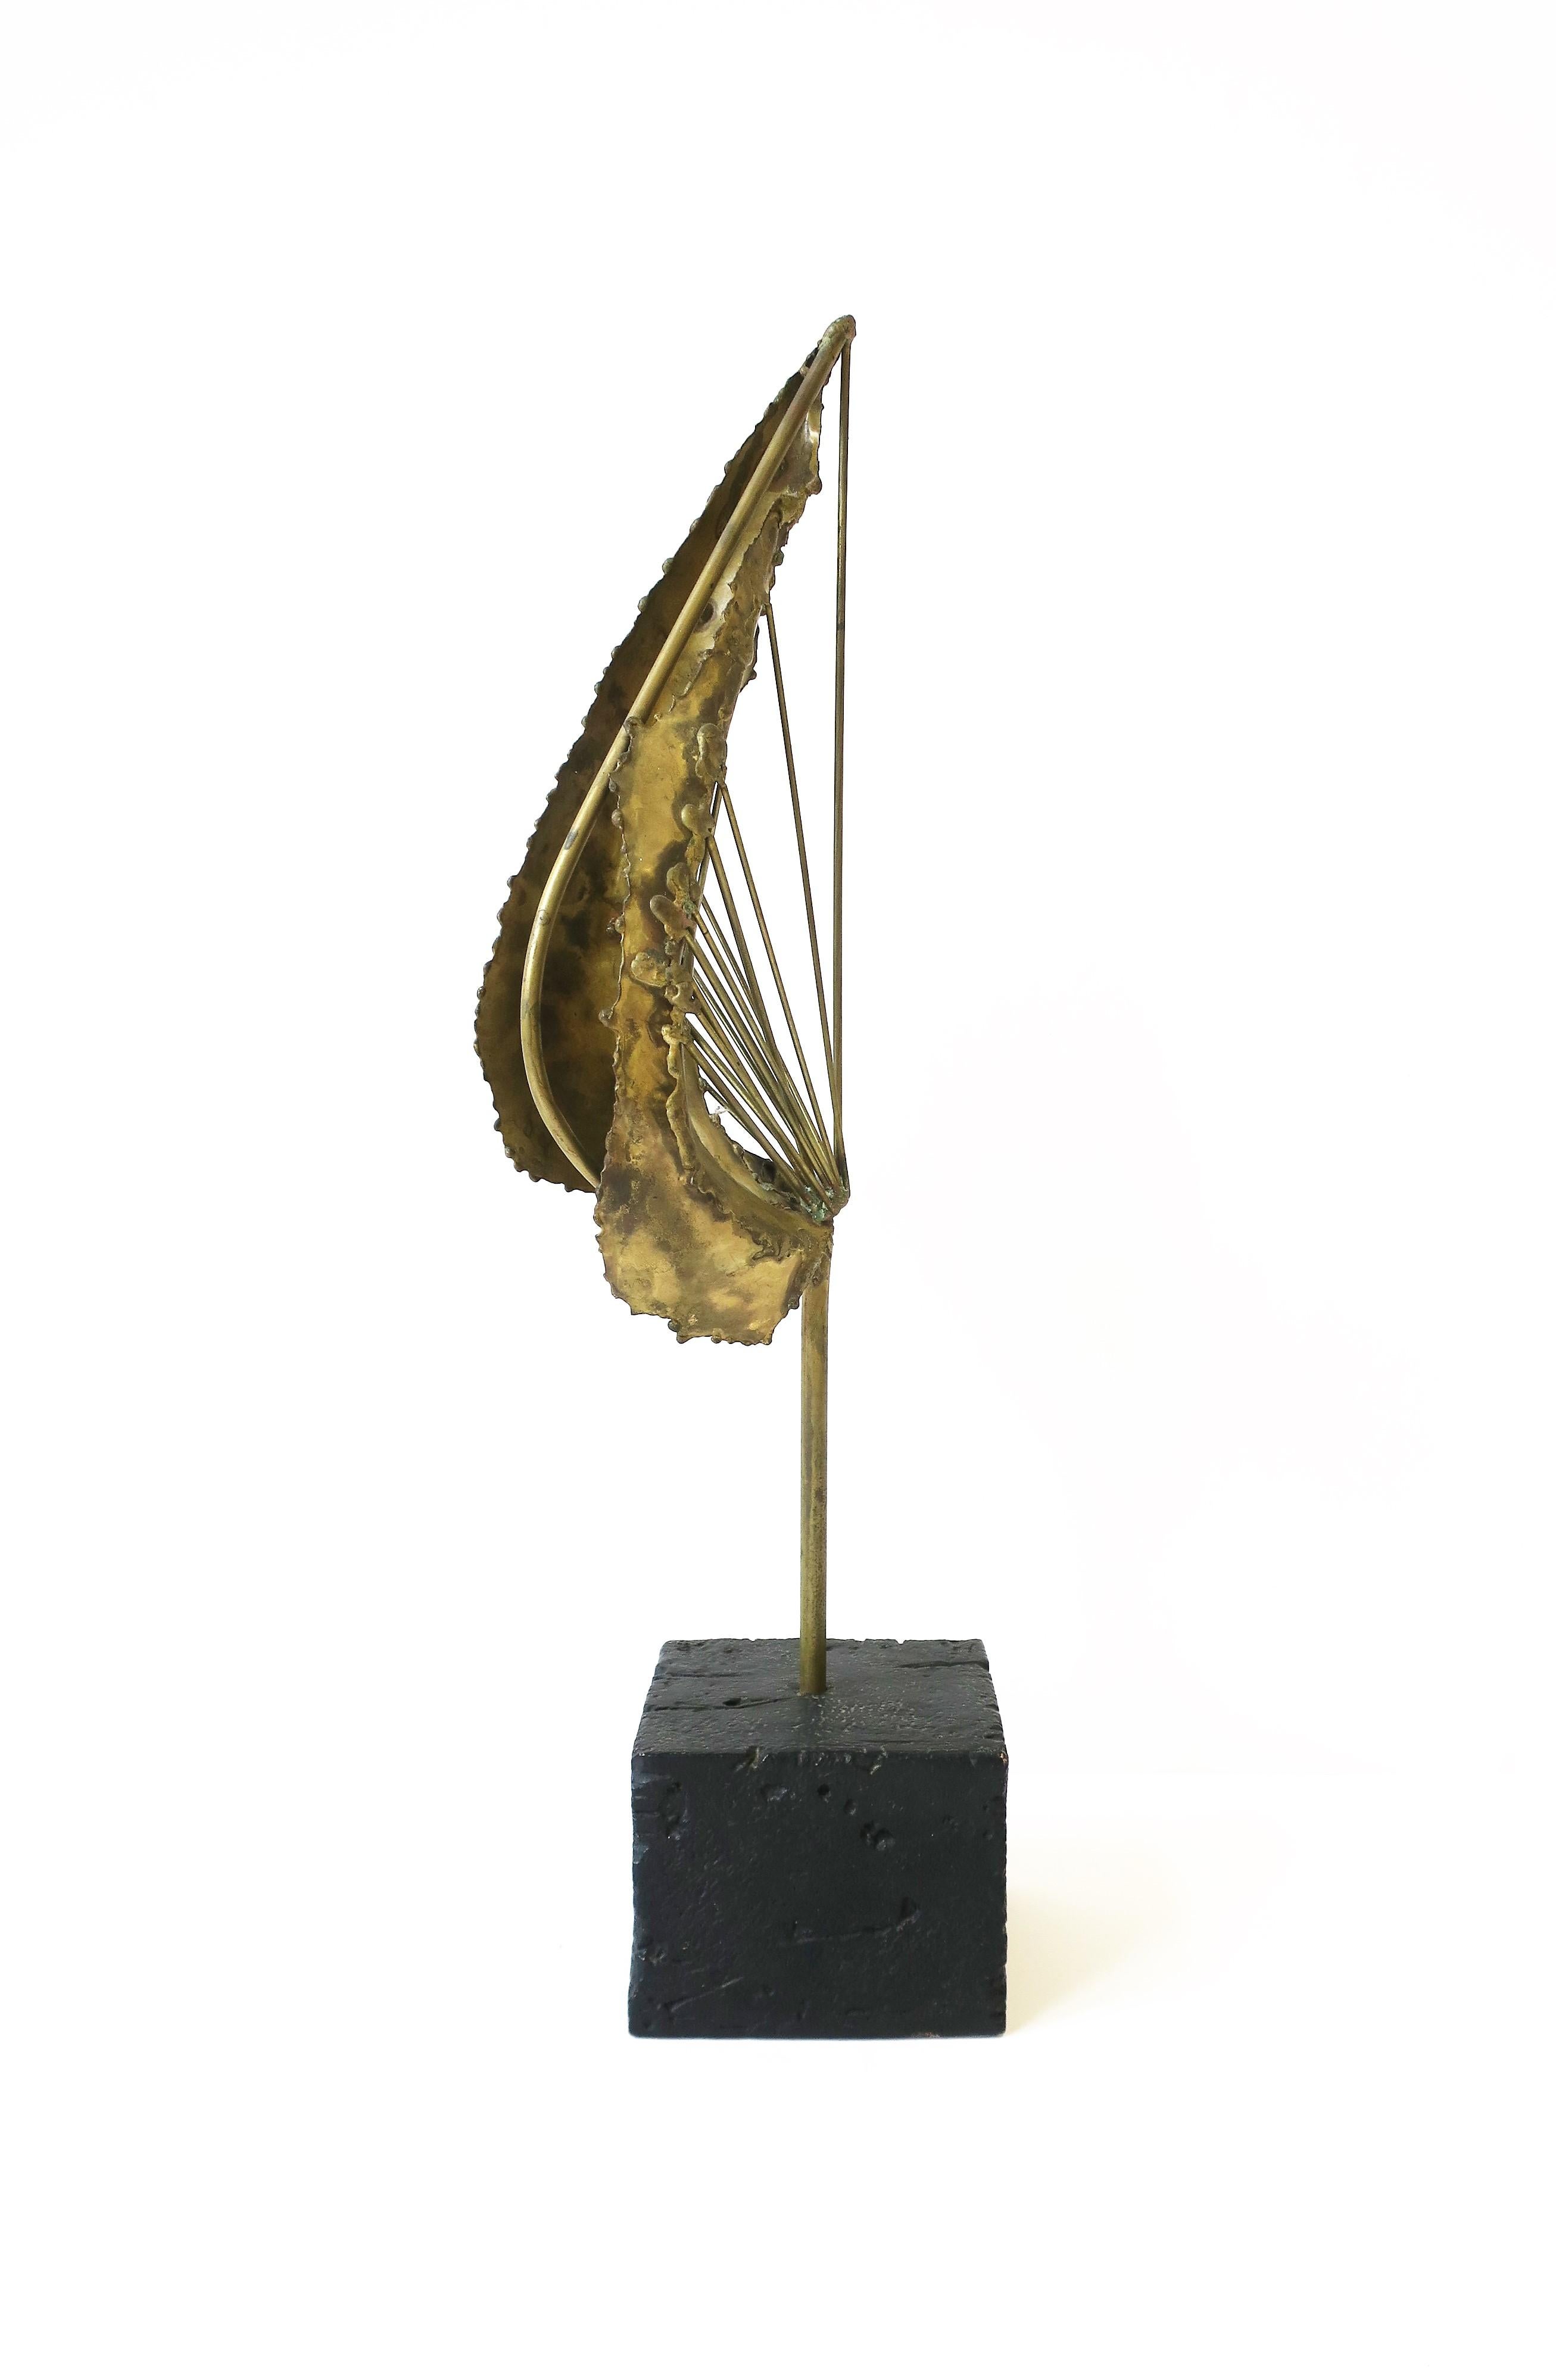 Midcentury Modern Brass Sculpture, circa 1960s For Sale 8